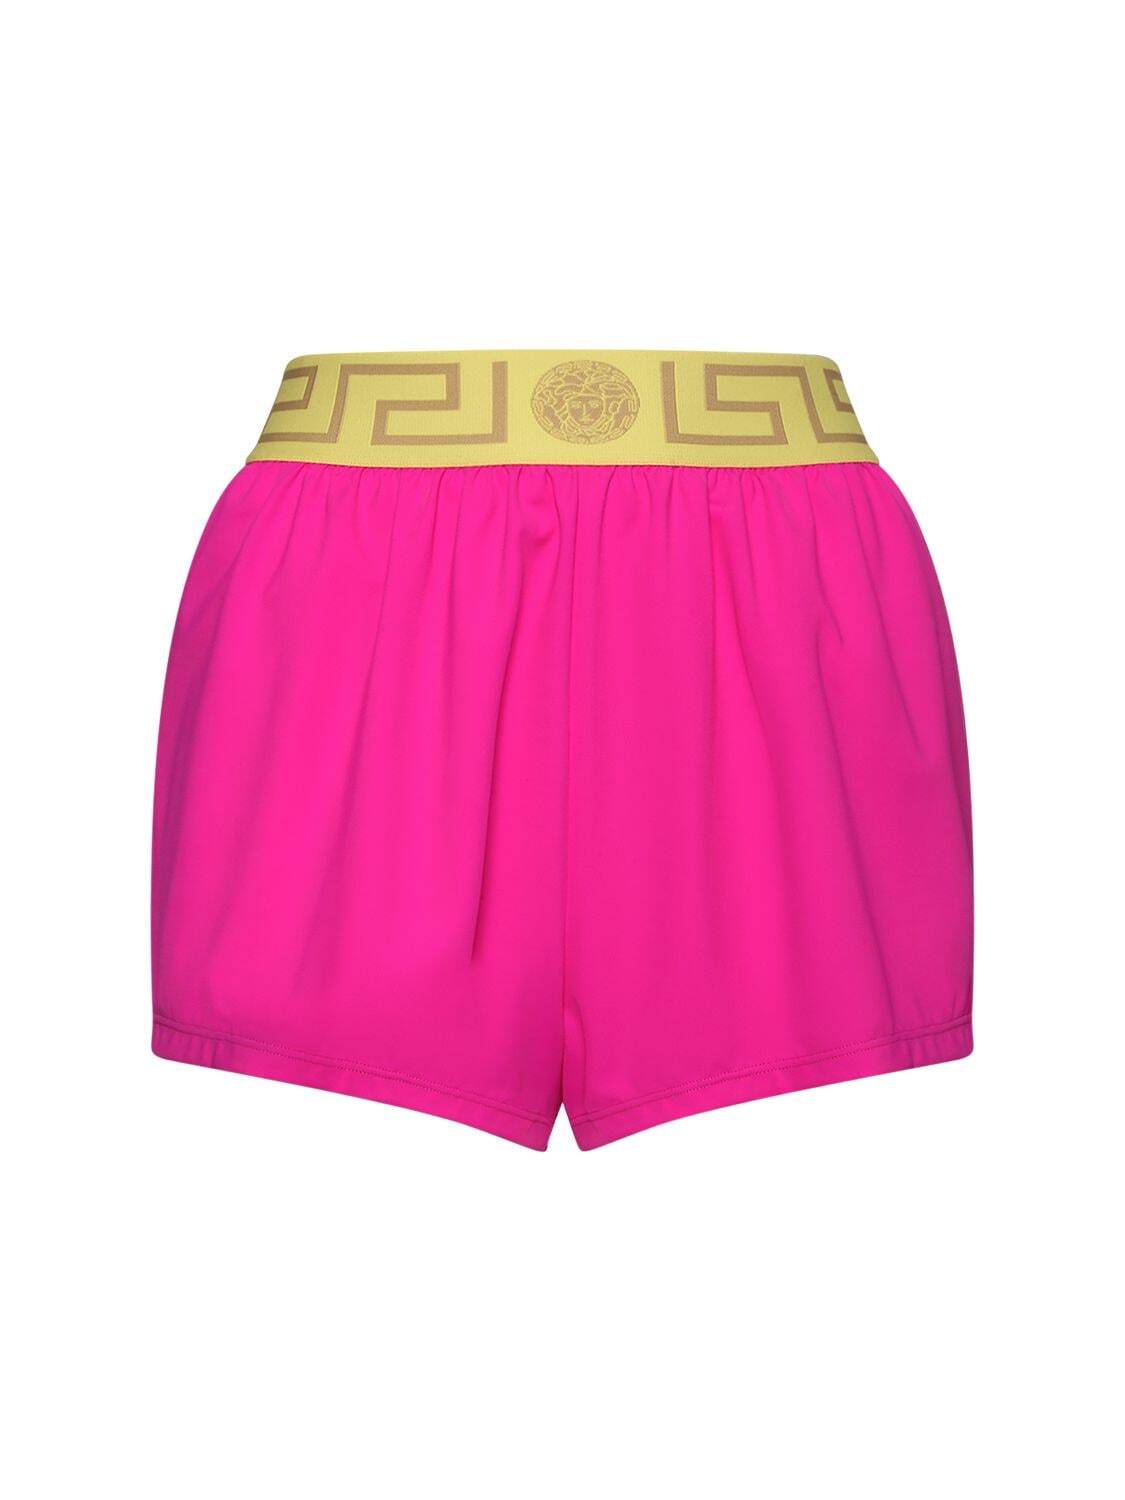 VERSACE Greek Logo Jersey Shorts in pink / yellow